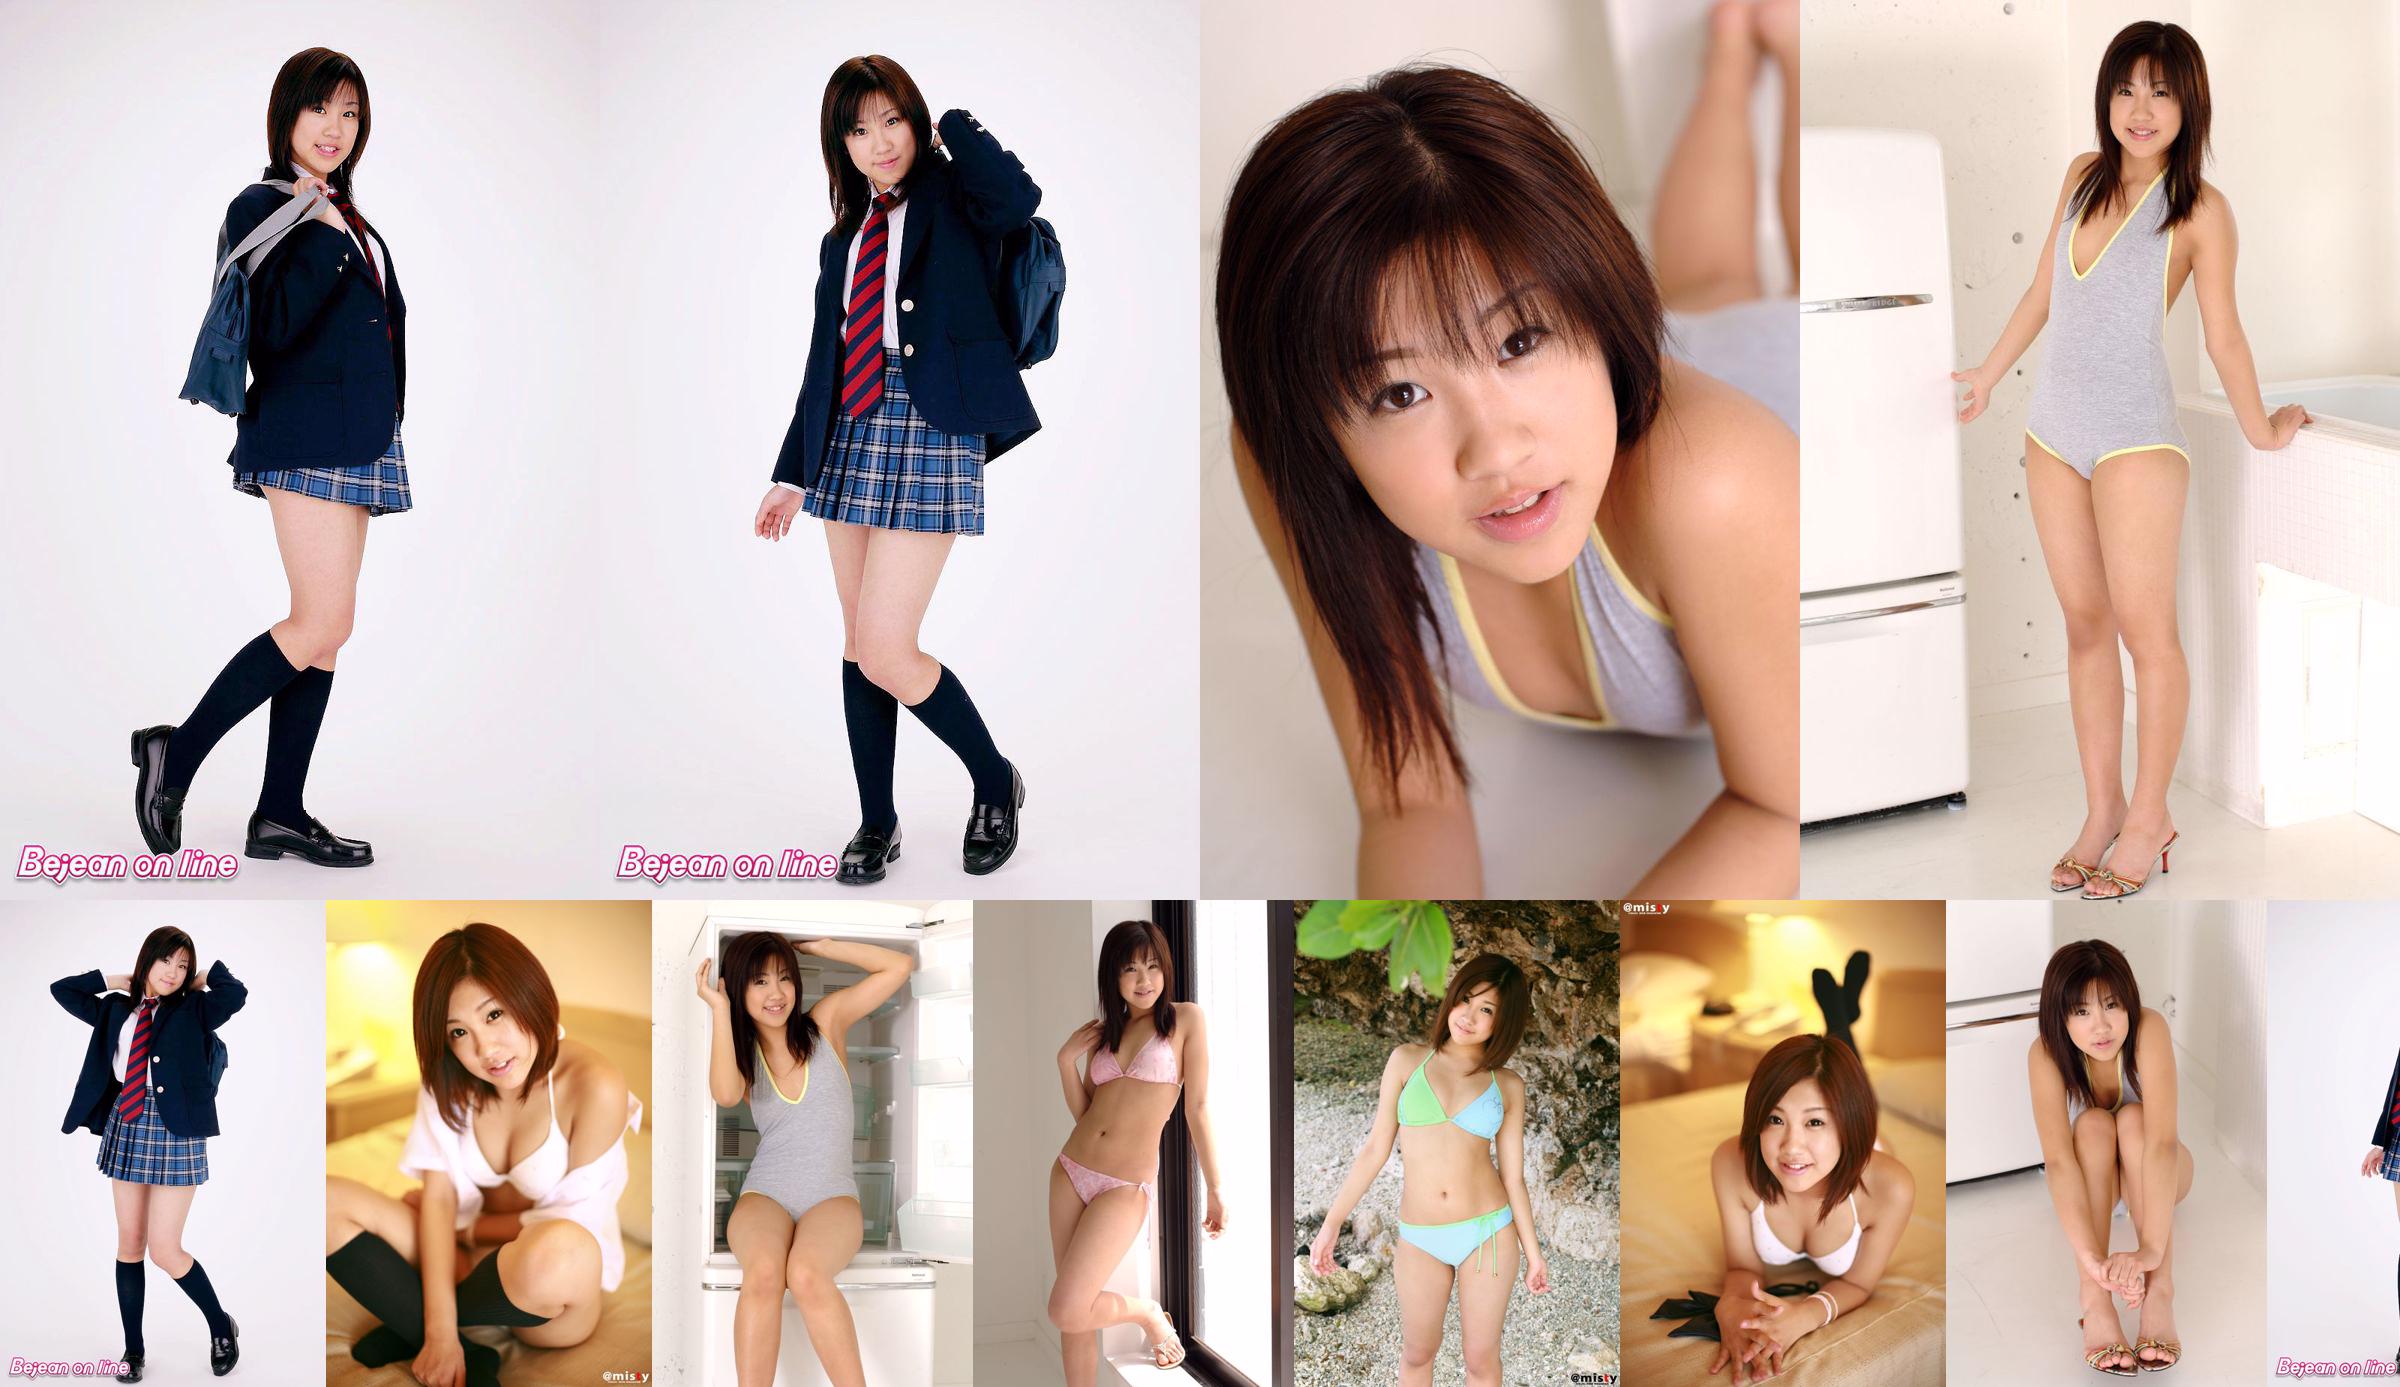 Scuola privata femminile Bejean Maho Nagase Maho Nagase [Bejean On Line] No.457a38 Pagina 4